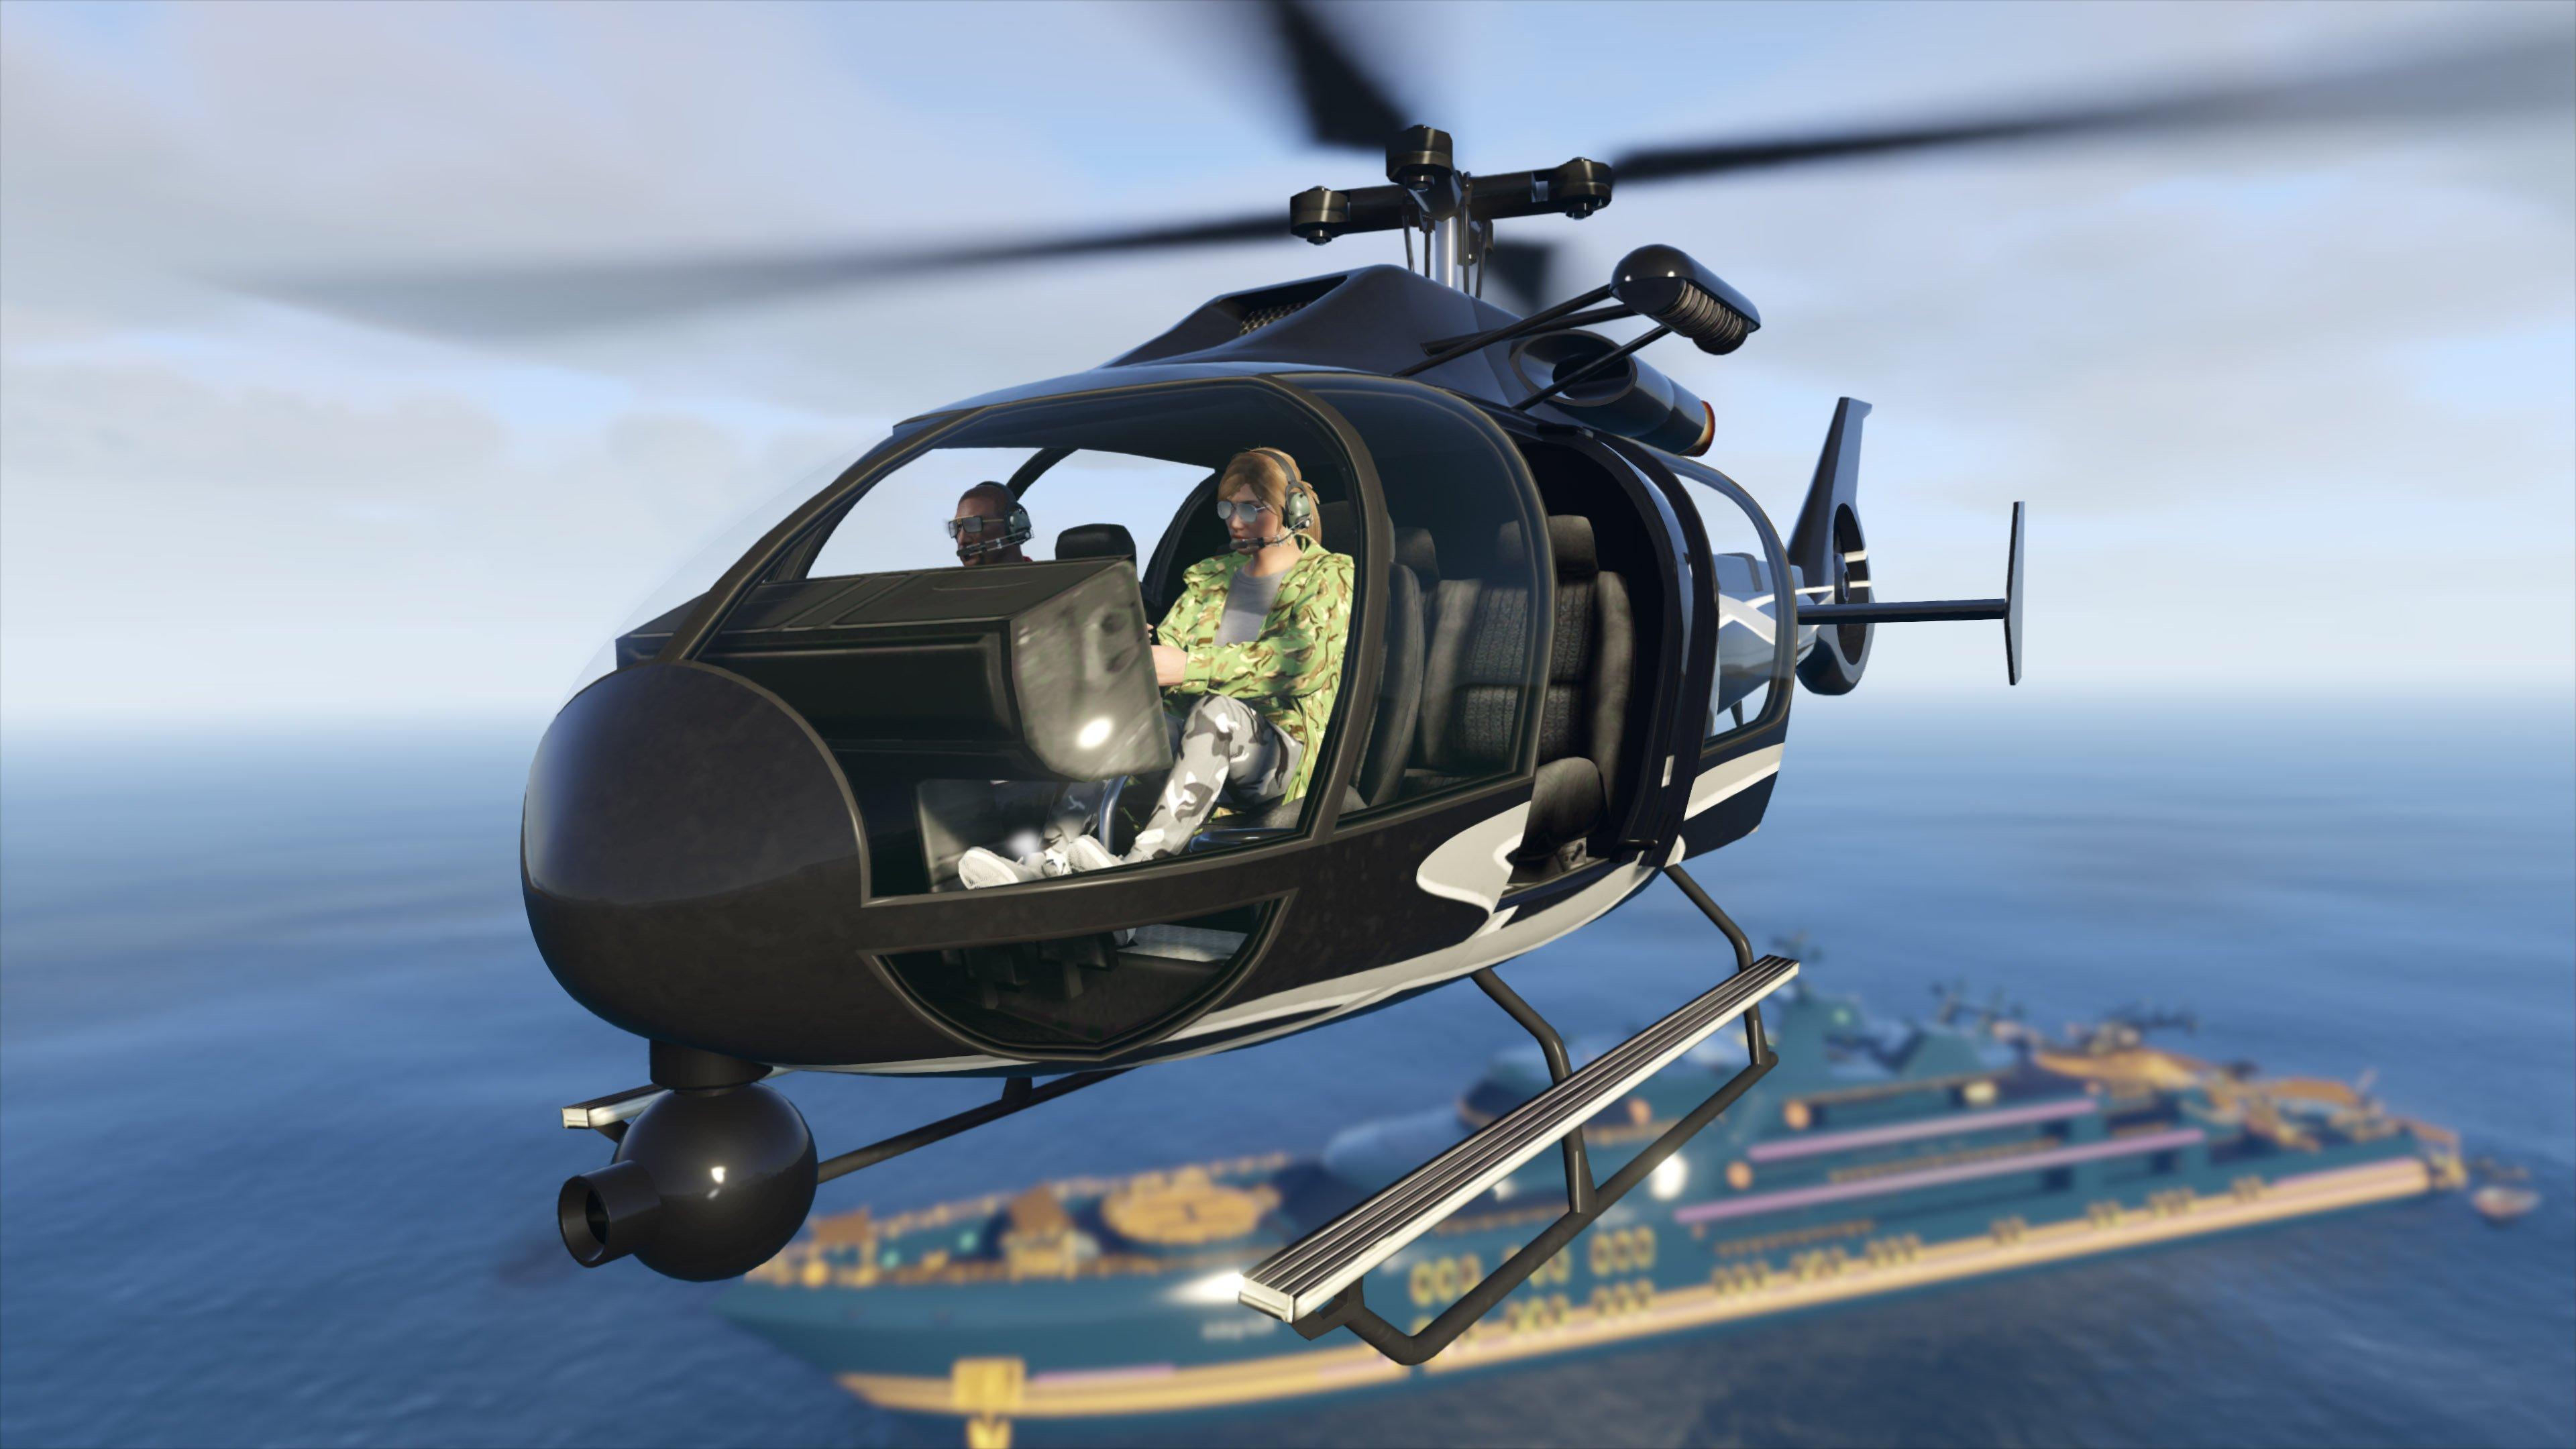  Grand Theft Auto V Premium Edition - Xbox One : Take 2